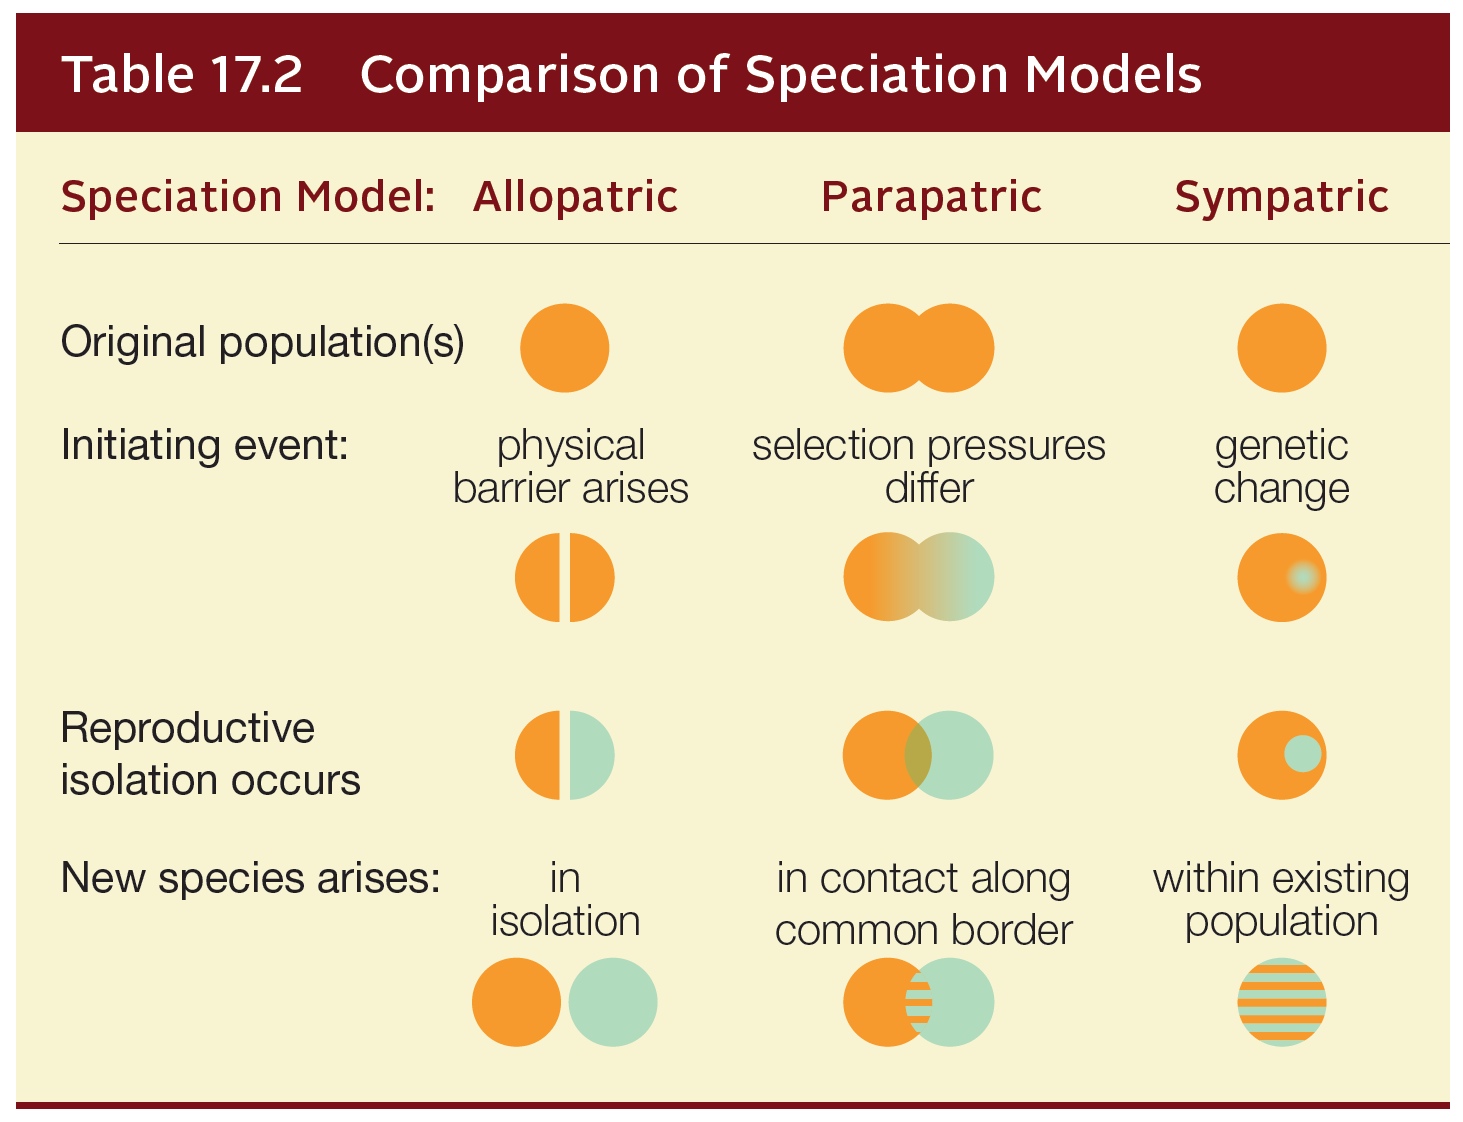 Comparison of Speciation Models